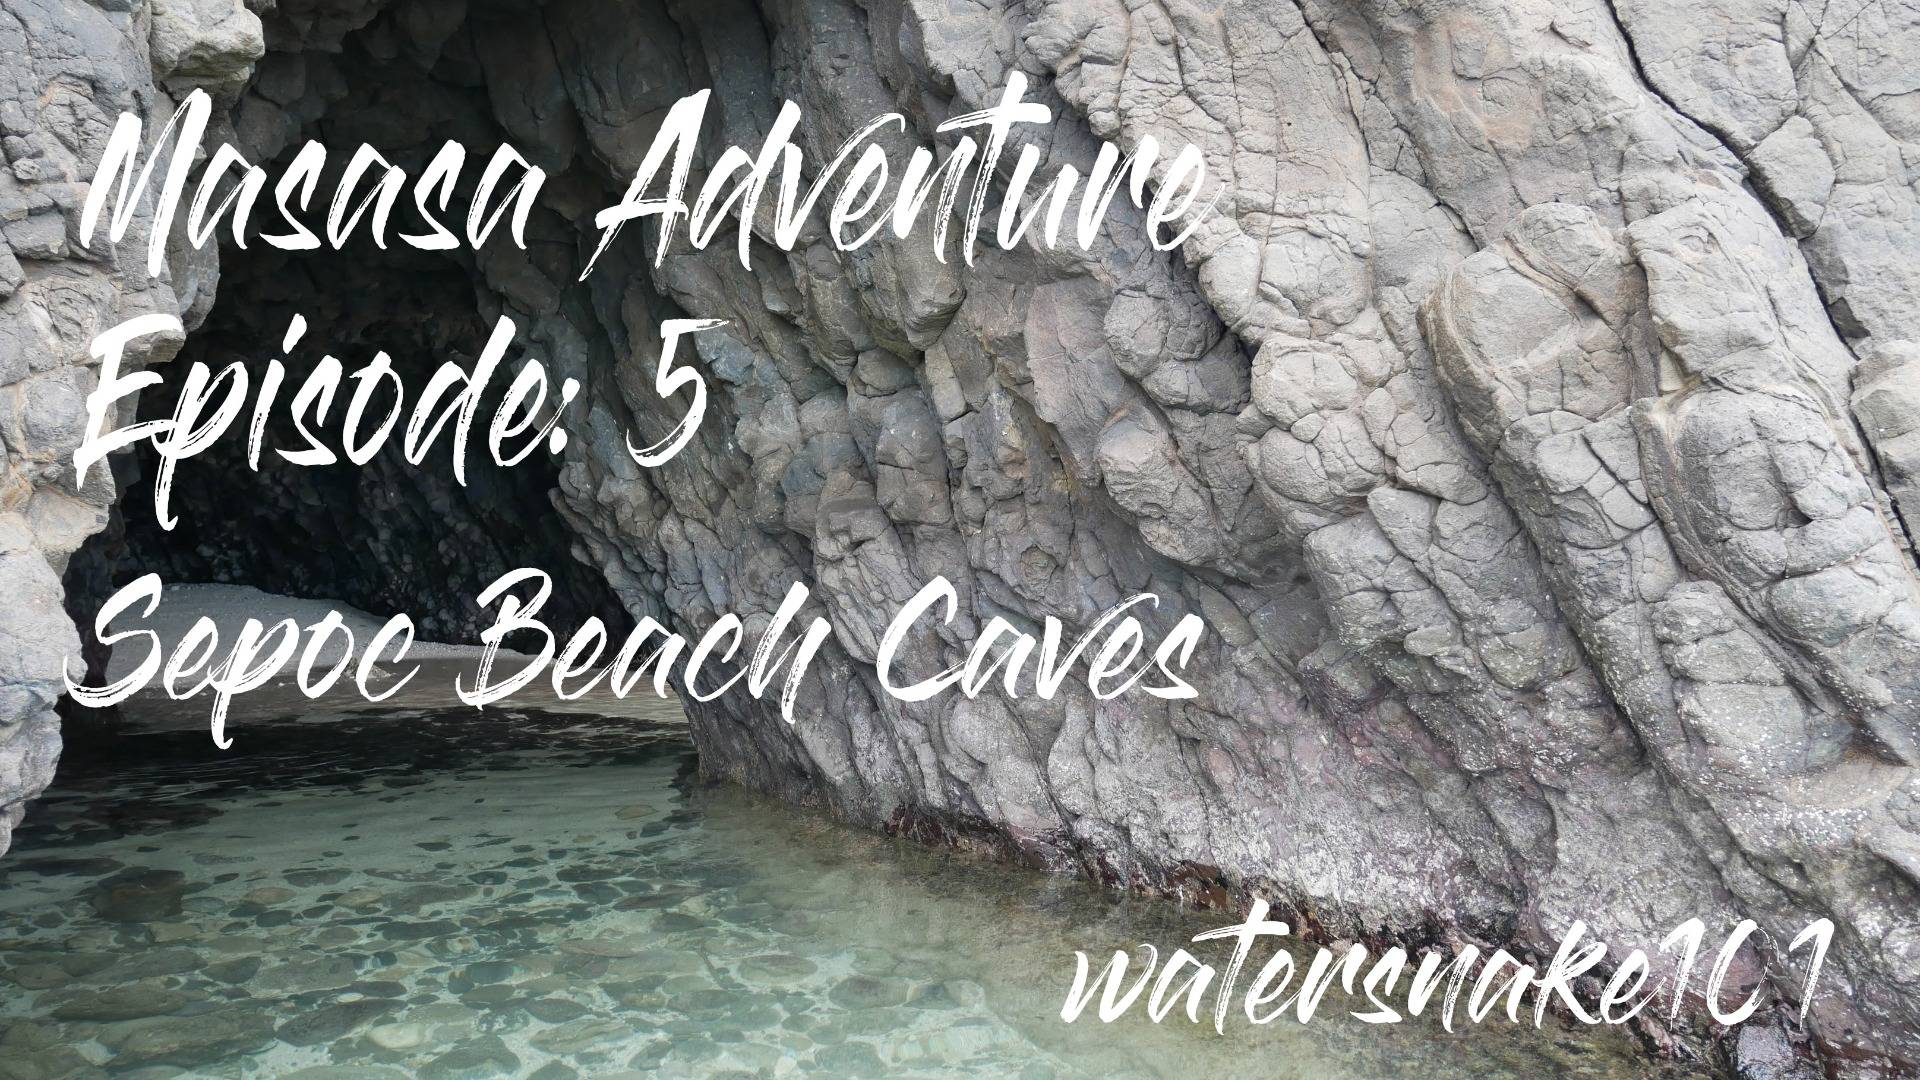 Masasa Adventure Episode: 5 "Sepoc Beach Caves"